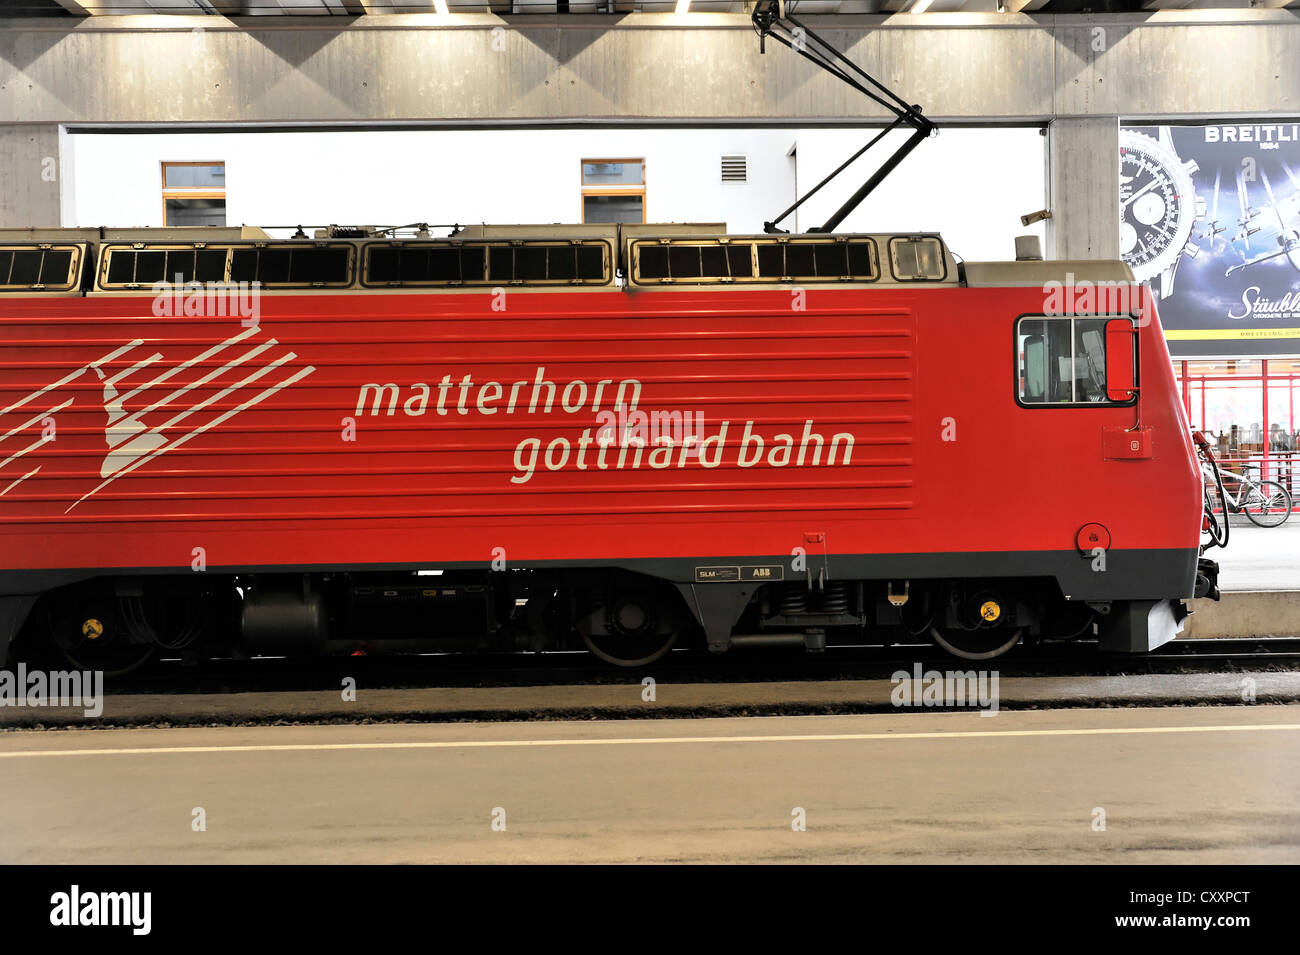 Locomotive, Matterhorn Gotthard Bahn train, railway station, Zermatt, canton of Valais, Swiss Alps, Switzerland, Europe Stock Photo